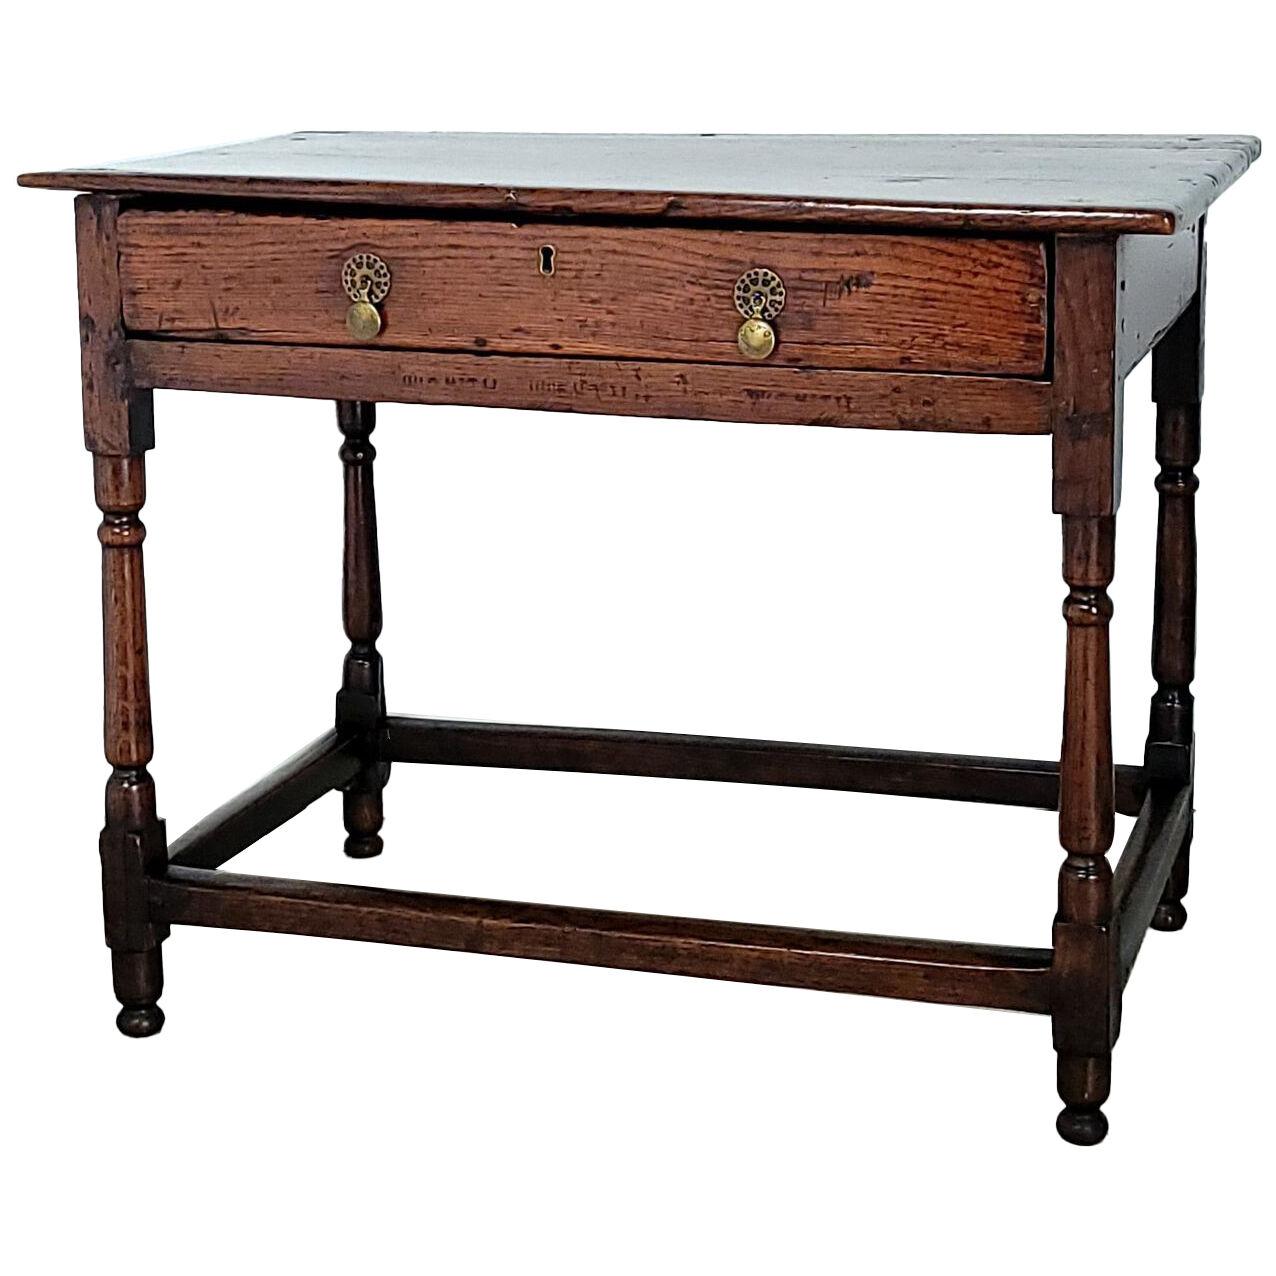 English Oak or Elm One Drawer Table, circa 1800